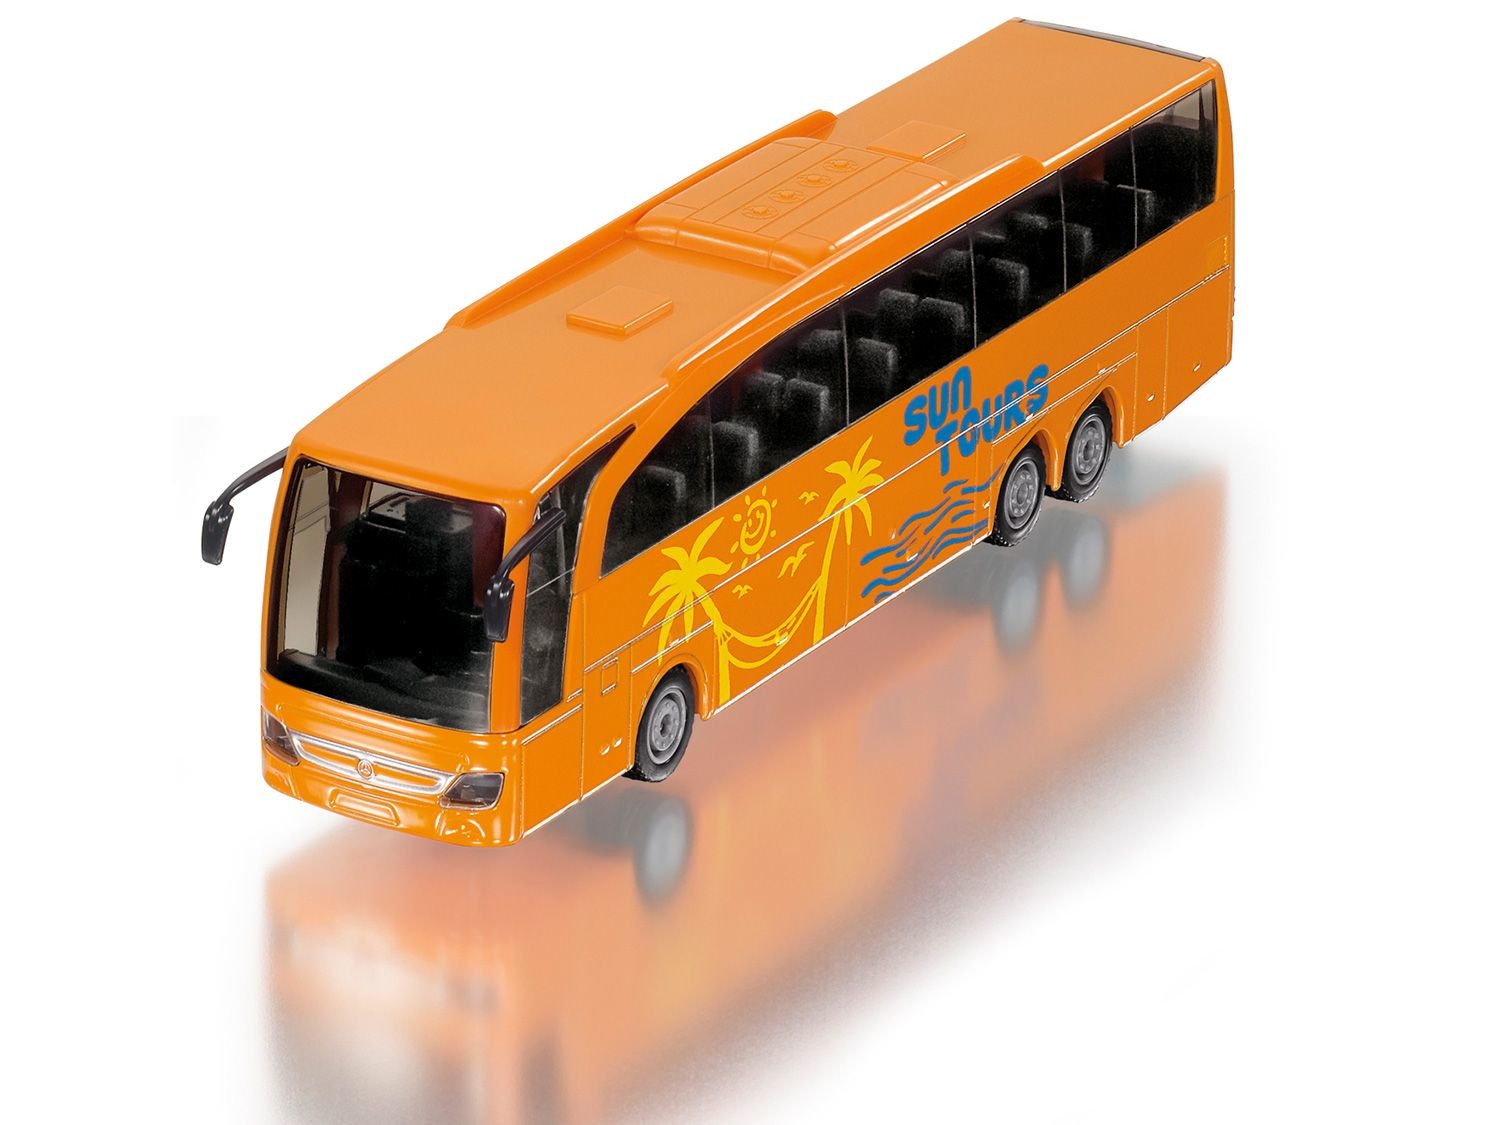 siku 3738 MercedesBenz Travego Reisebus, im Maßstab 150